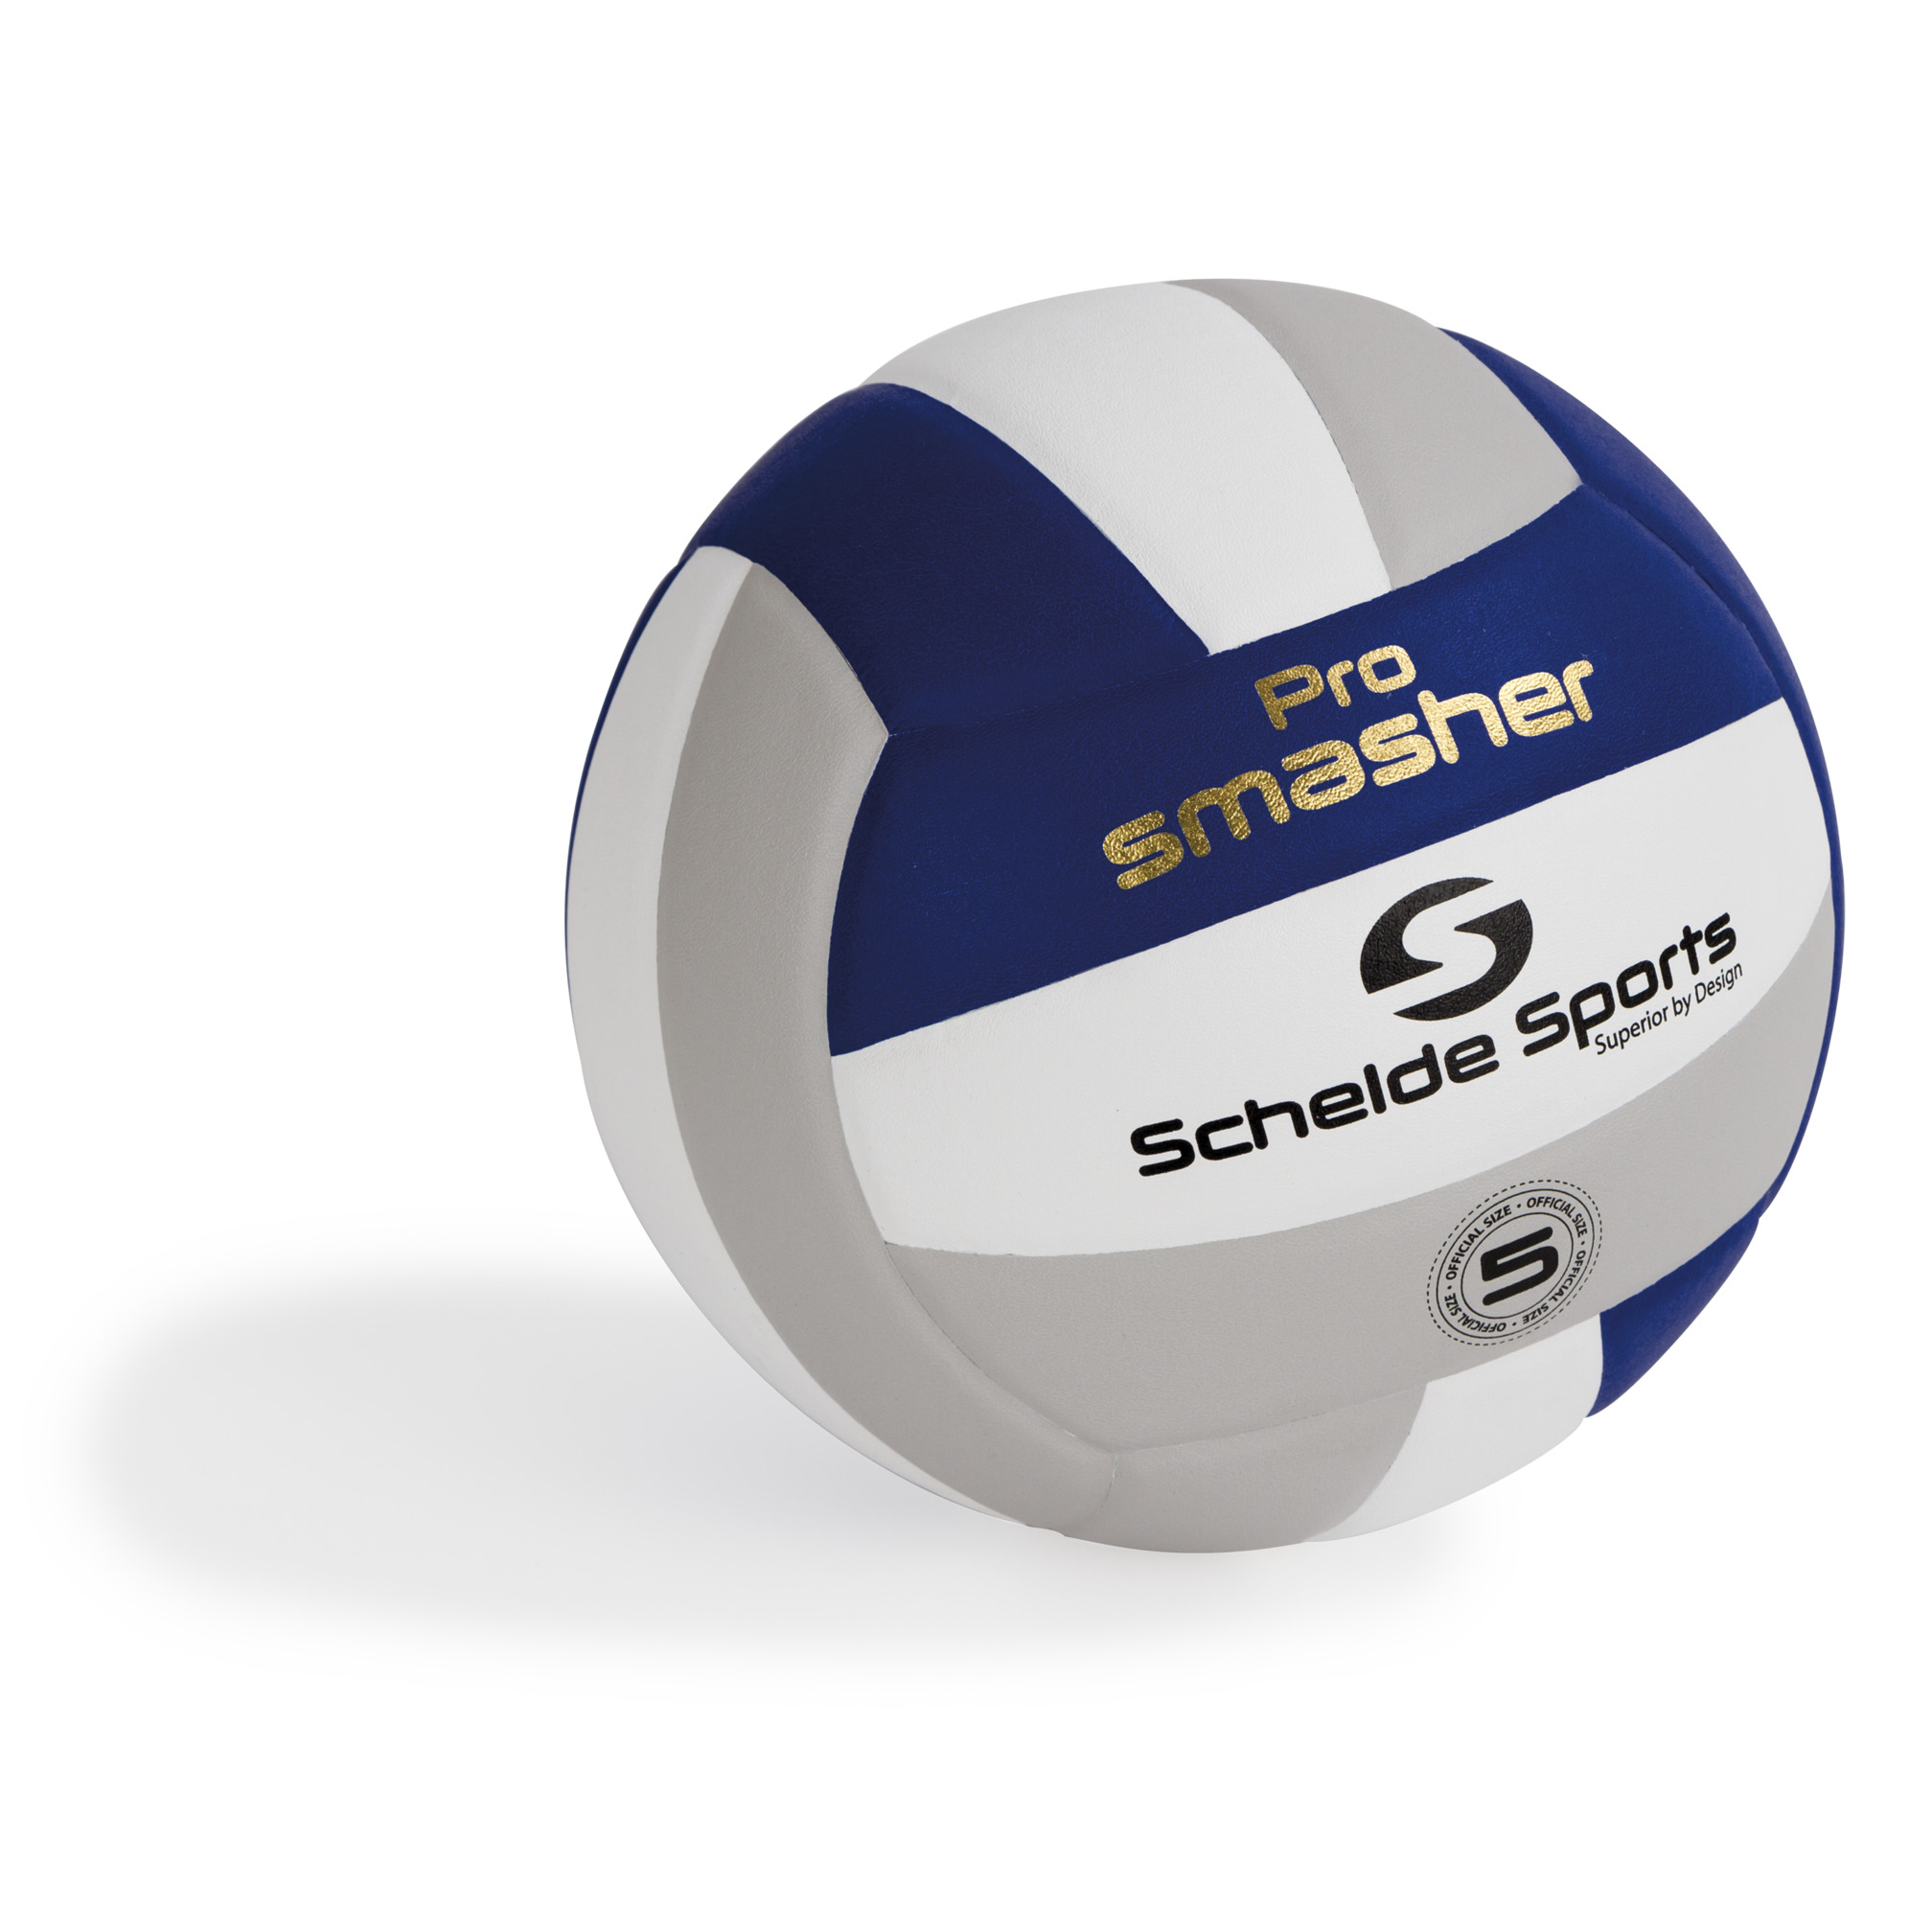 Ballon de volley Schelde Pro Smasher, T5